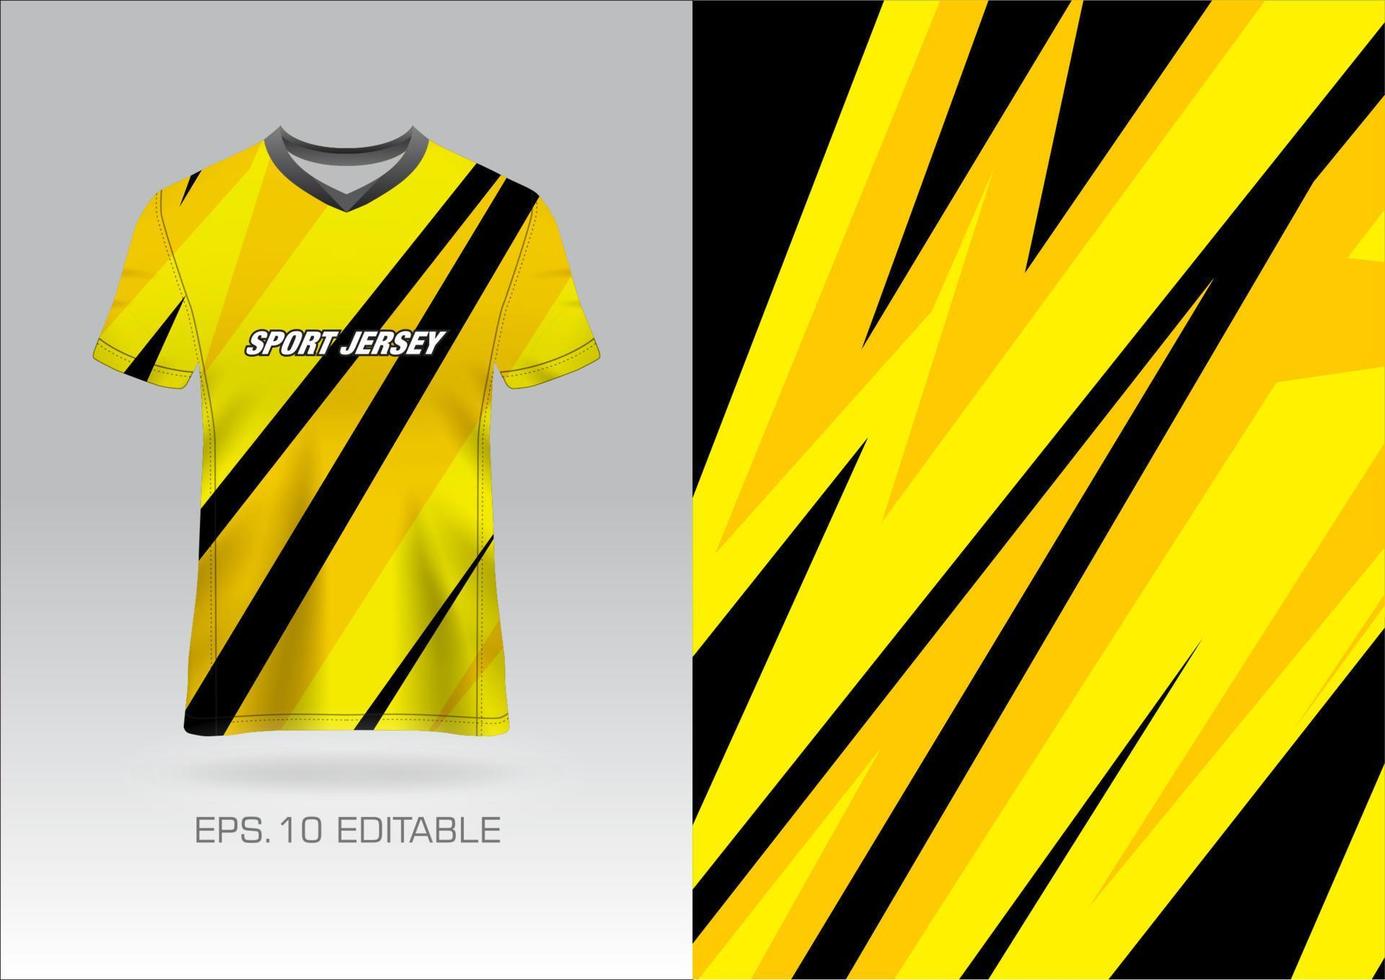 kleding stof textiel ontwerp voor sport t-shirt, voetbal Jersey mockup voor Amerikaans voetbal club. uniform voorkant visie. vector